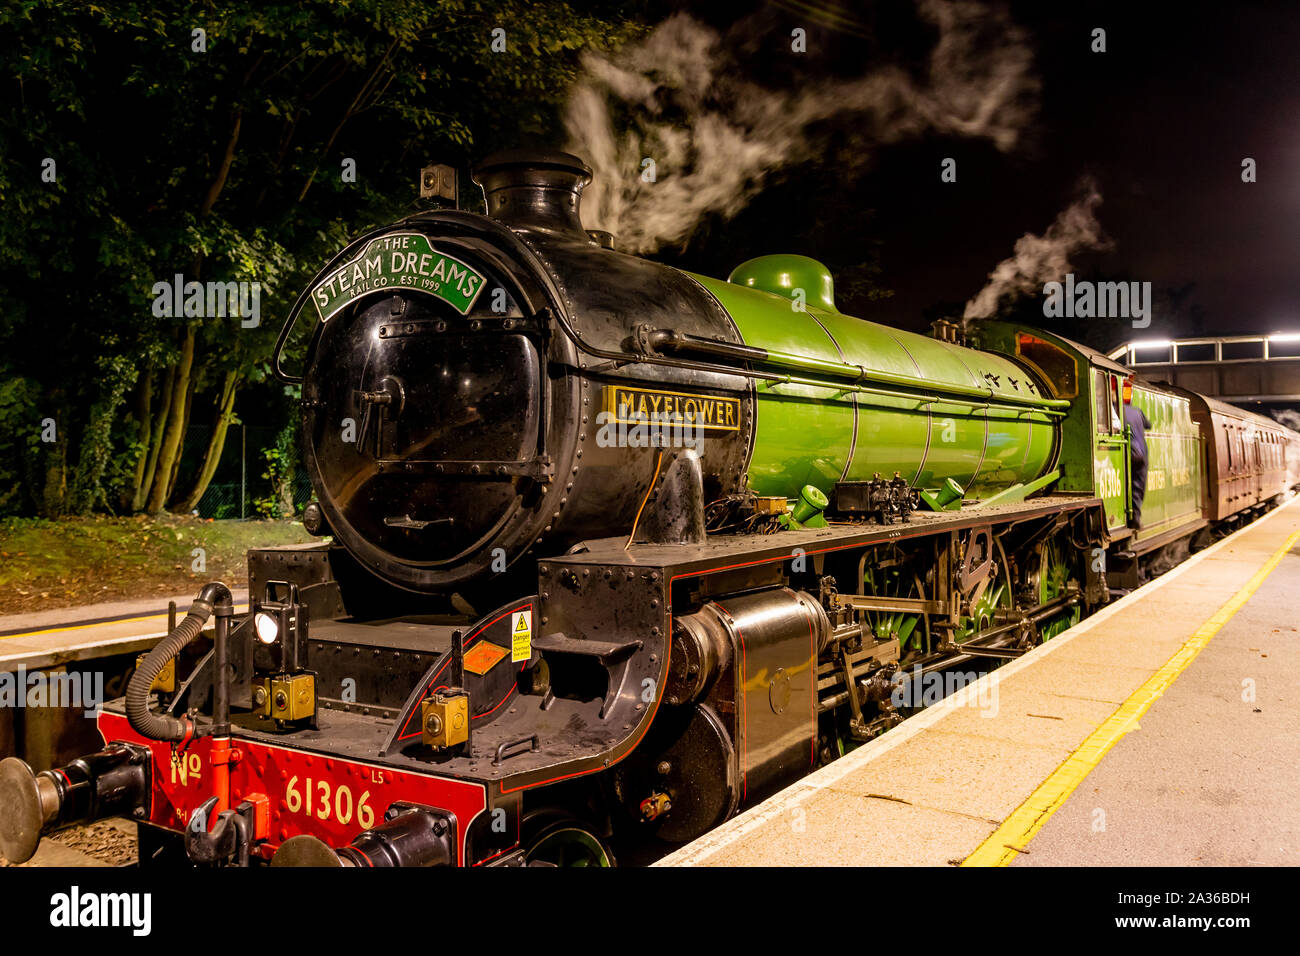 Green British Treno a Vapore Surrey autunno Foto Stock